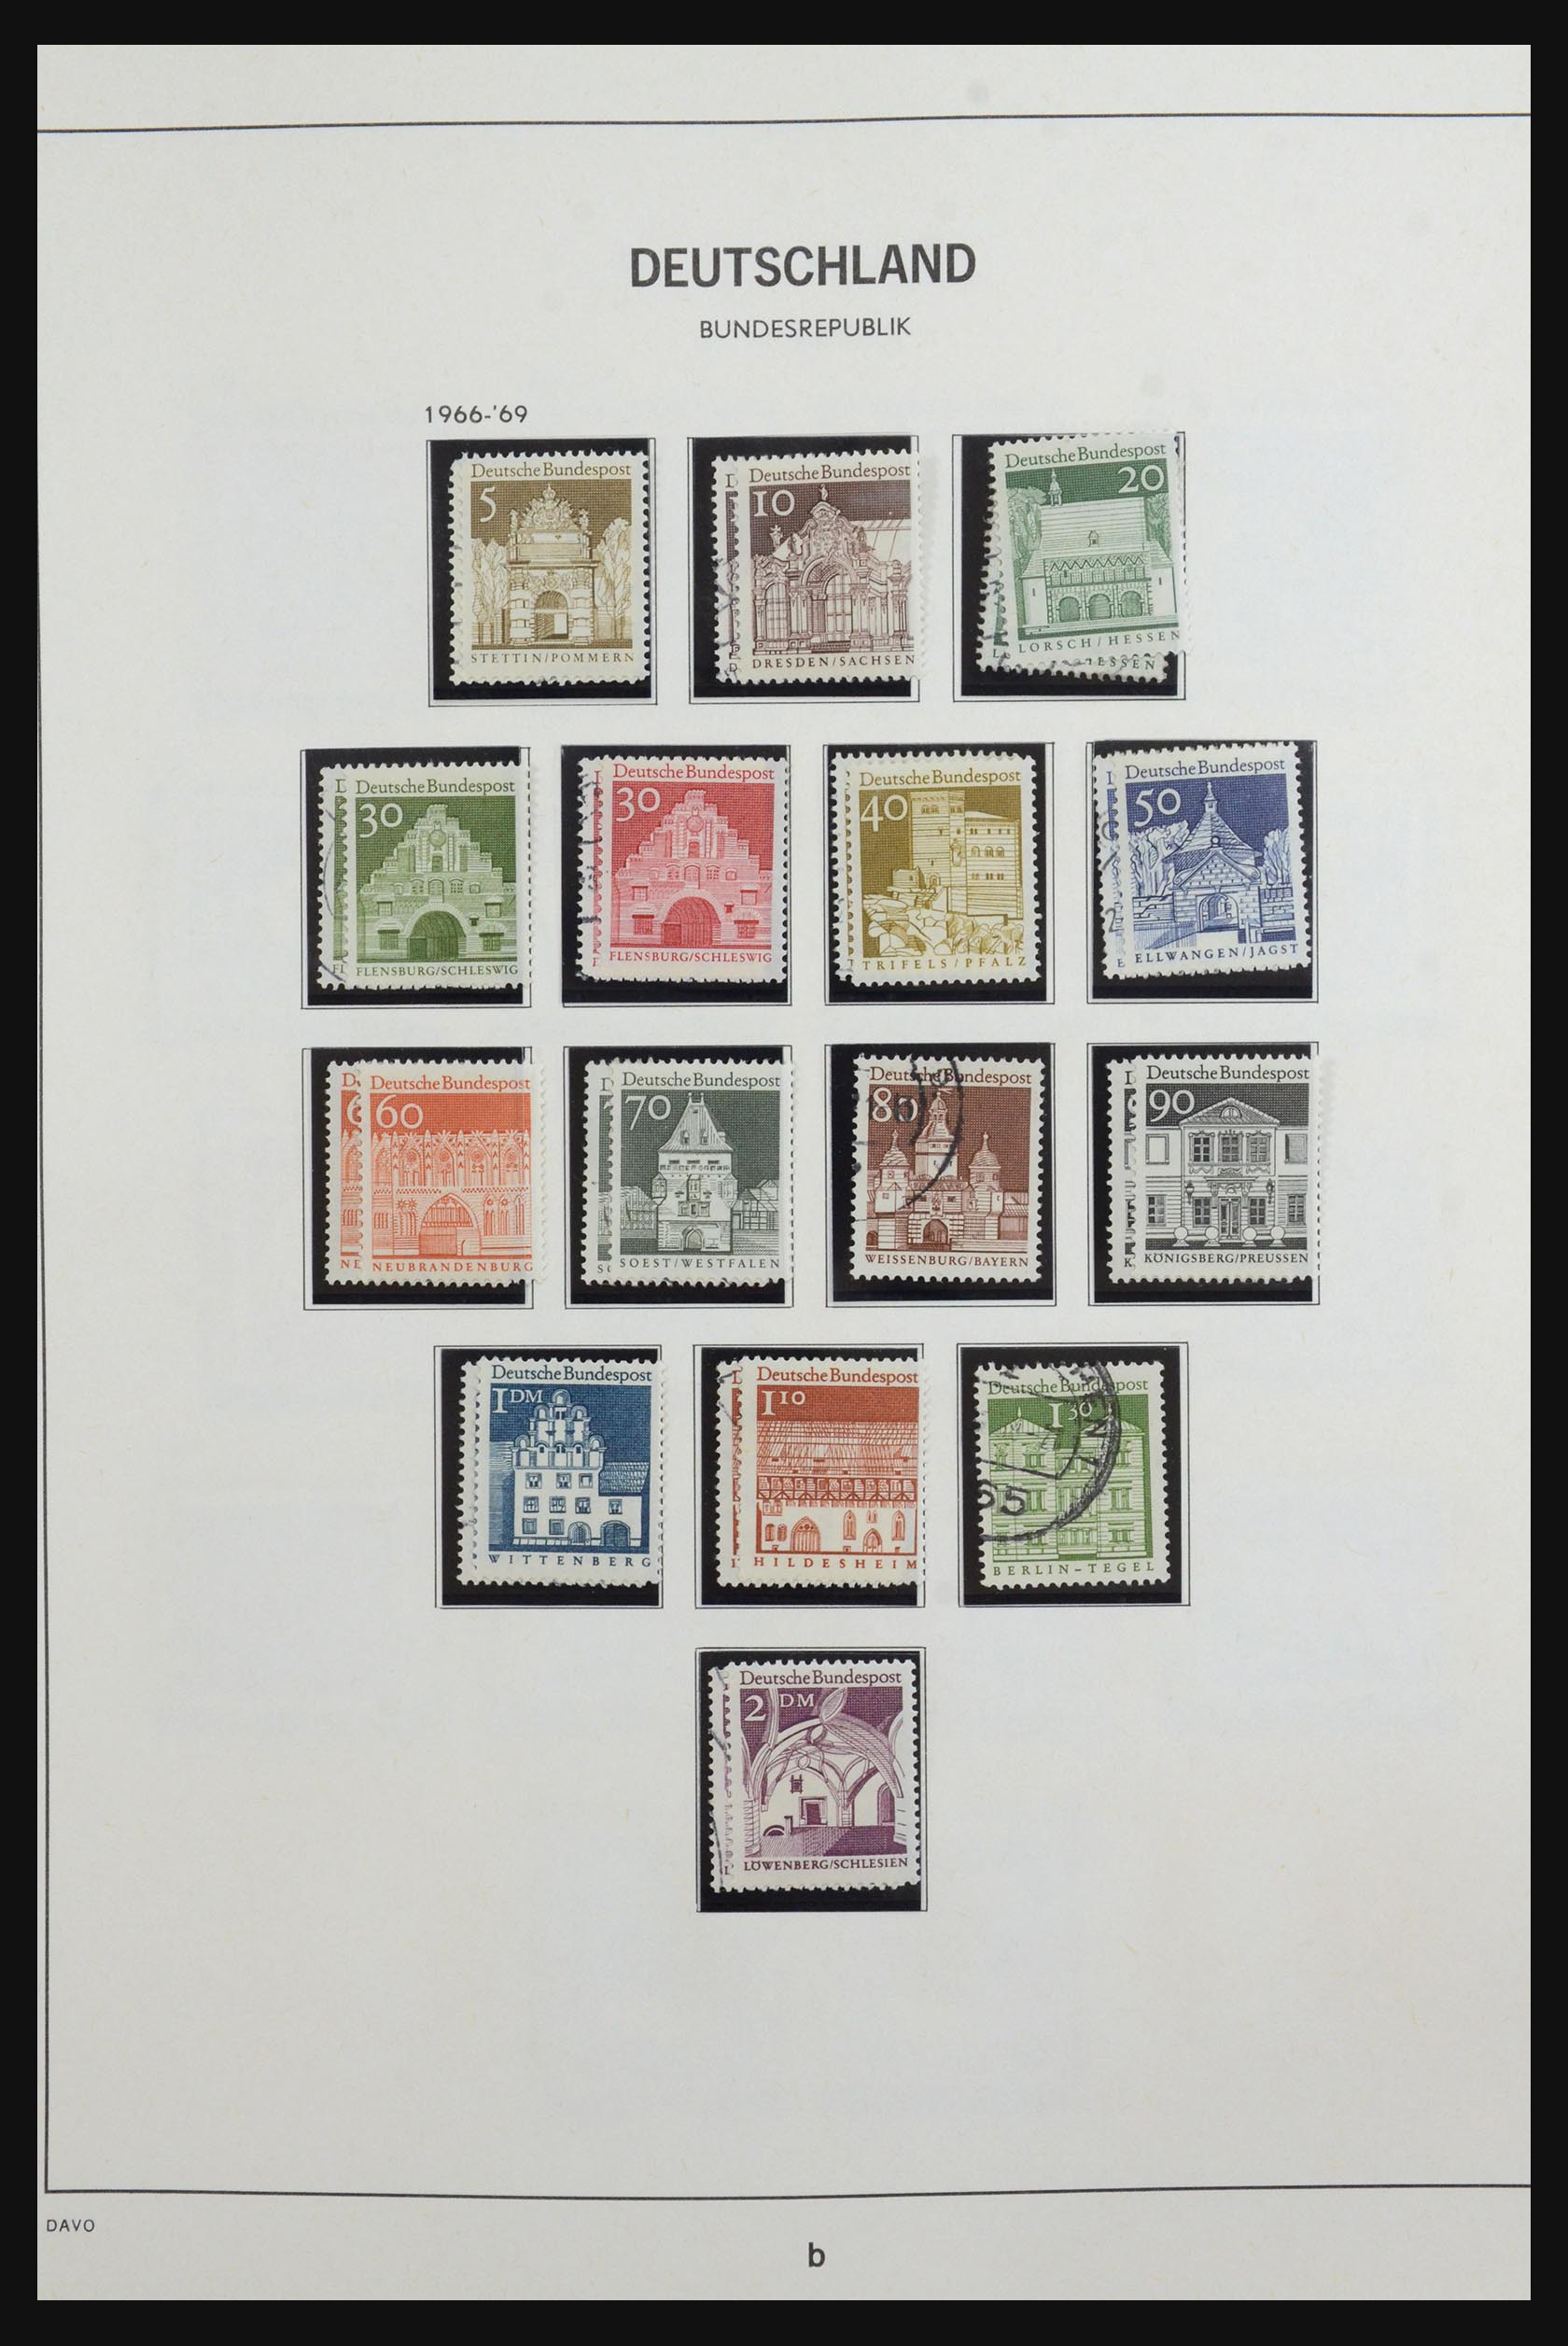 31635 075 - 31635 Bundespost 1949-2000.